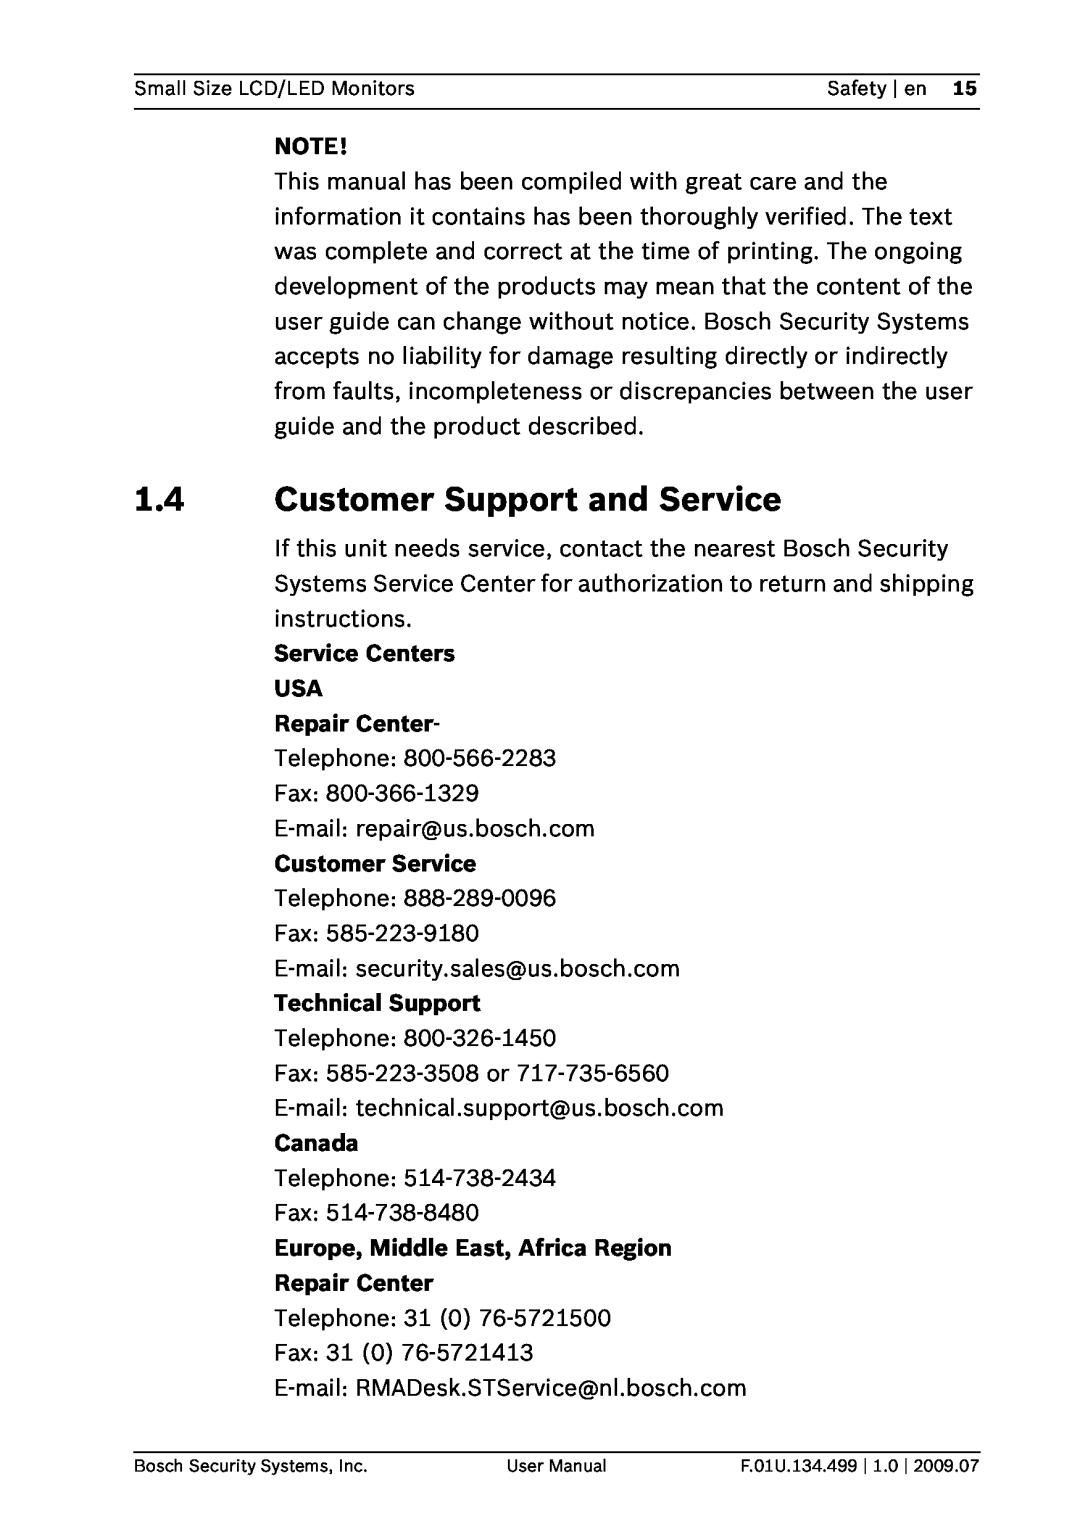 Bosch Appliances UML-082-90 Customer Support and Service, Service Centers USA Repair Center, Customer Service, Canada 